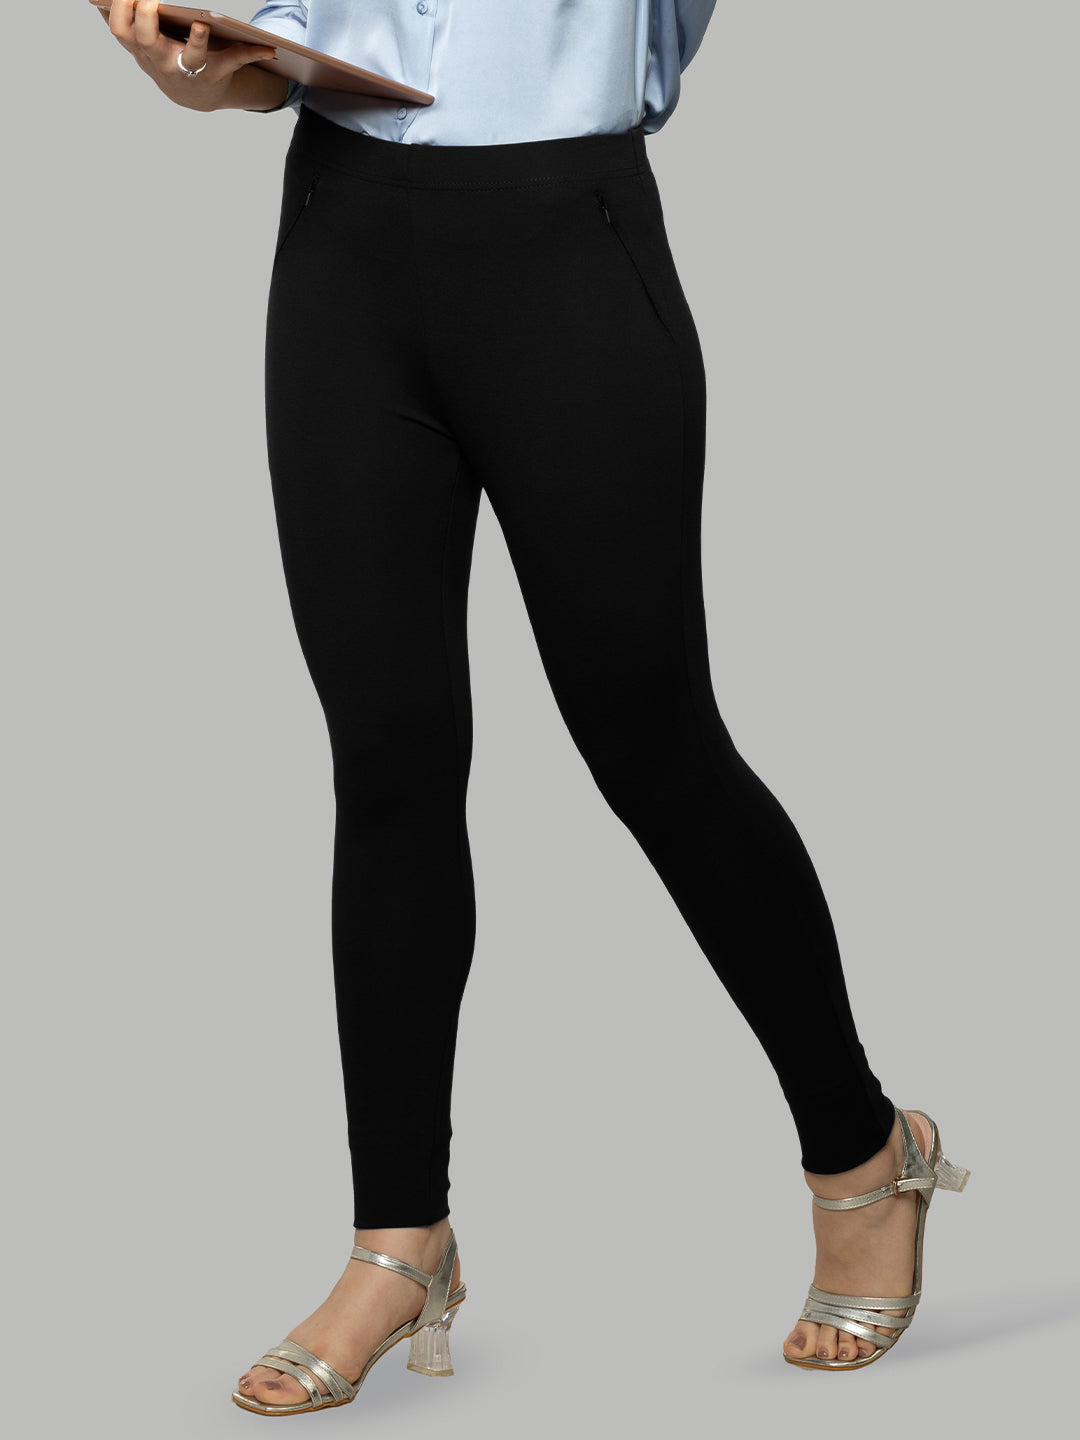 Buy Black Track Pants for Women by LYRA Online | Ajio.com